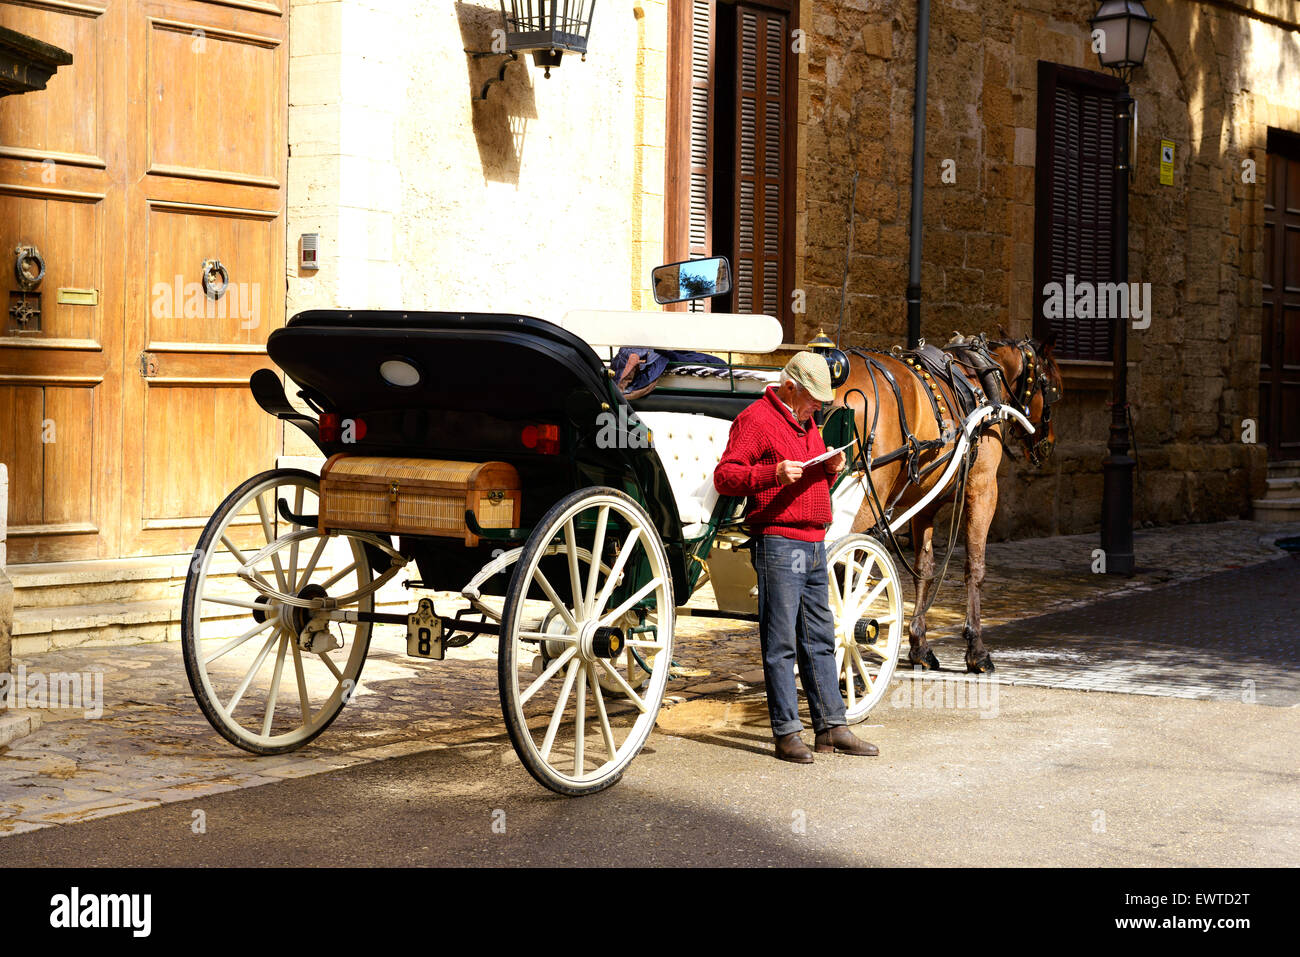 Horse-drawn carriage, Palma de Mallorca, Mallorca, Balearic Islands, Spain Stock Photo